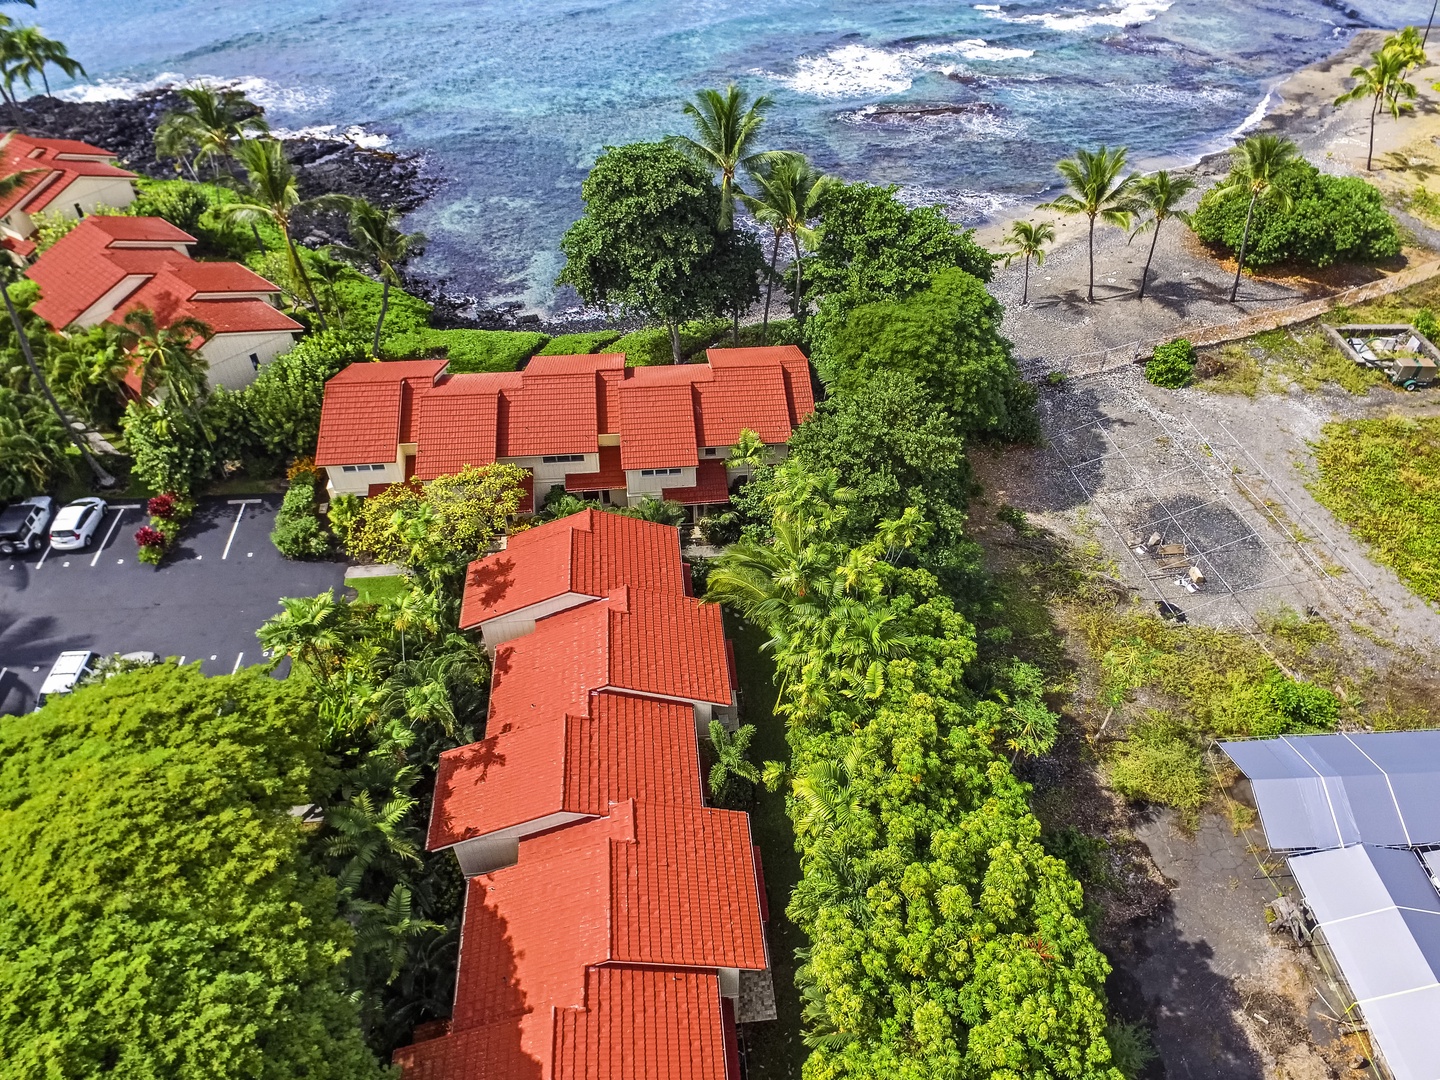 Kailua Kona Vacation Rentals, Keauhou Kona Surf & Racquet 2101 - Aerial view of the condo with ocean views